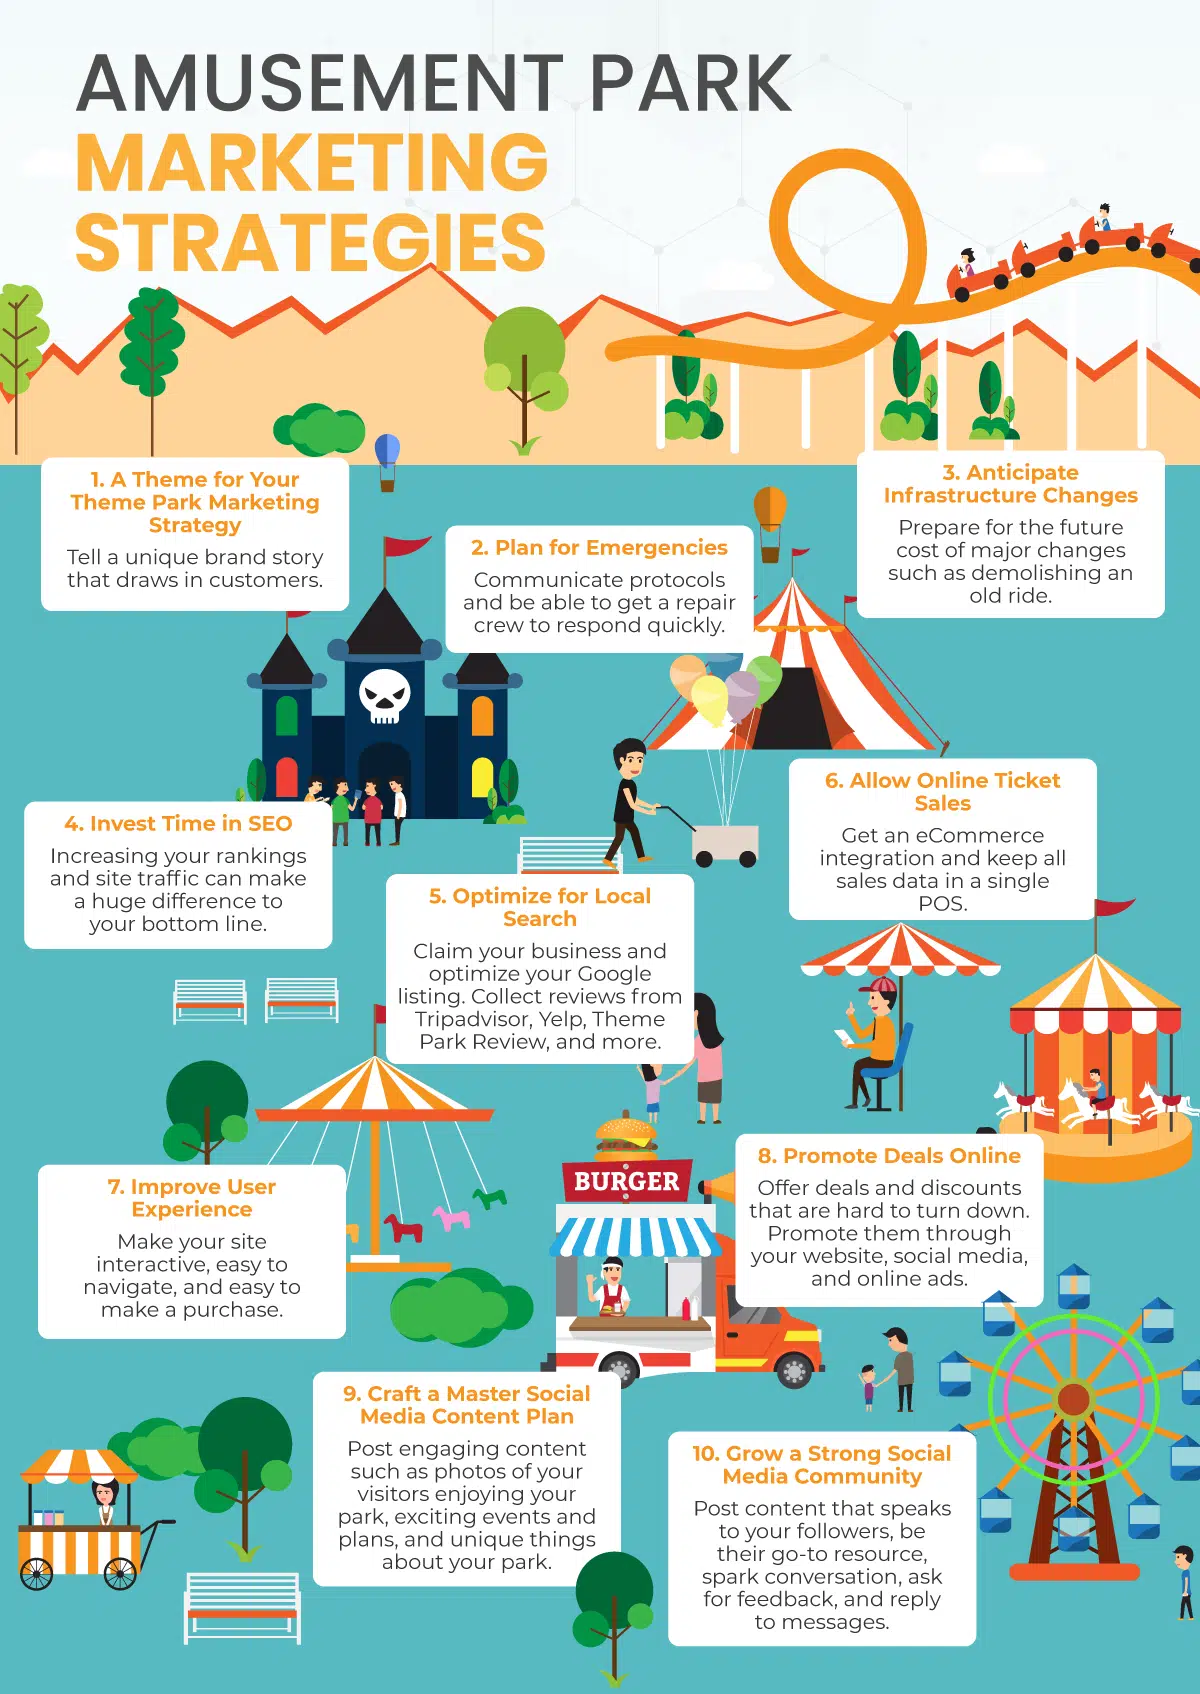 an infographic showing amusement park marketing strategies